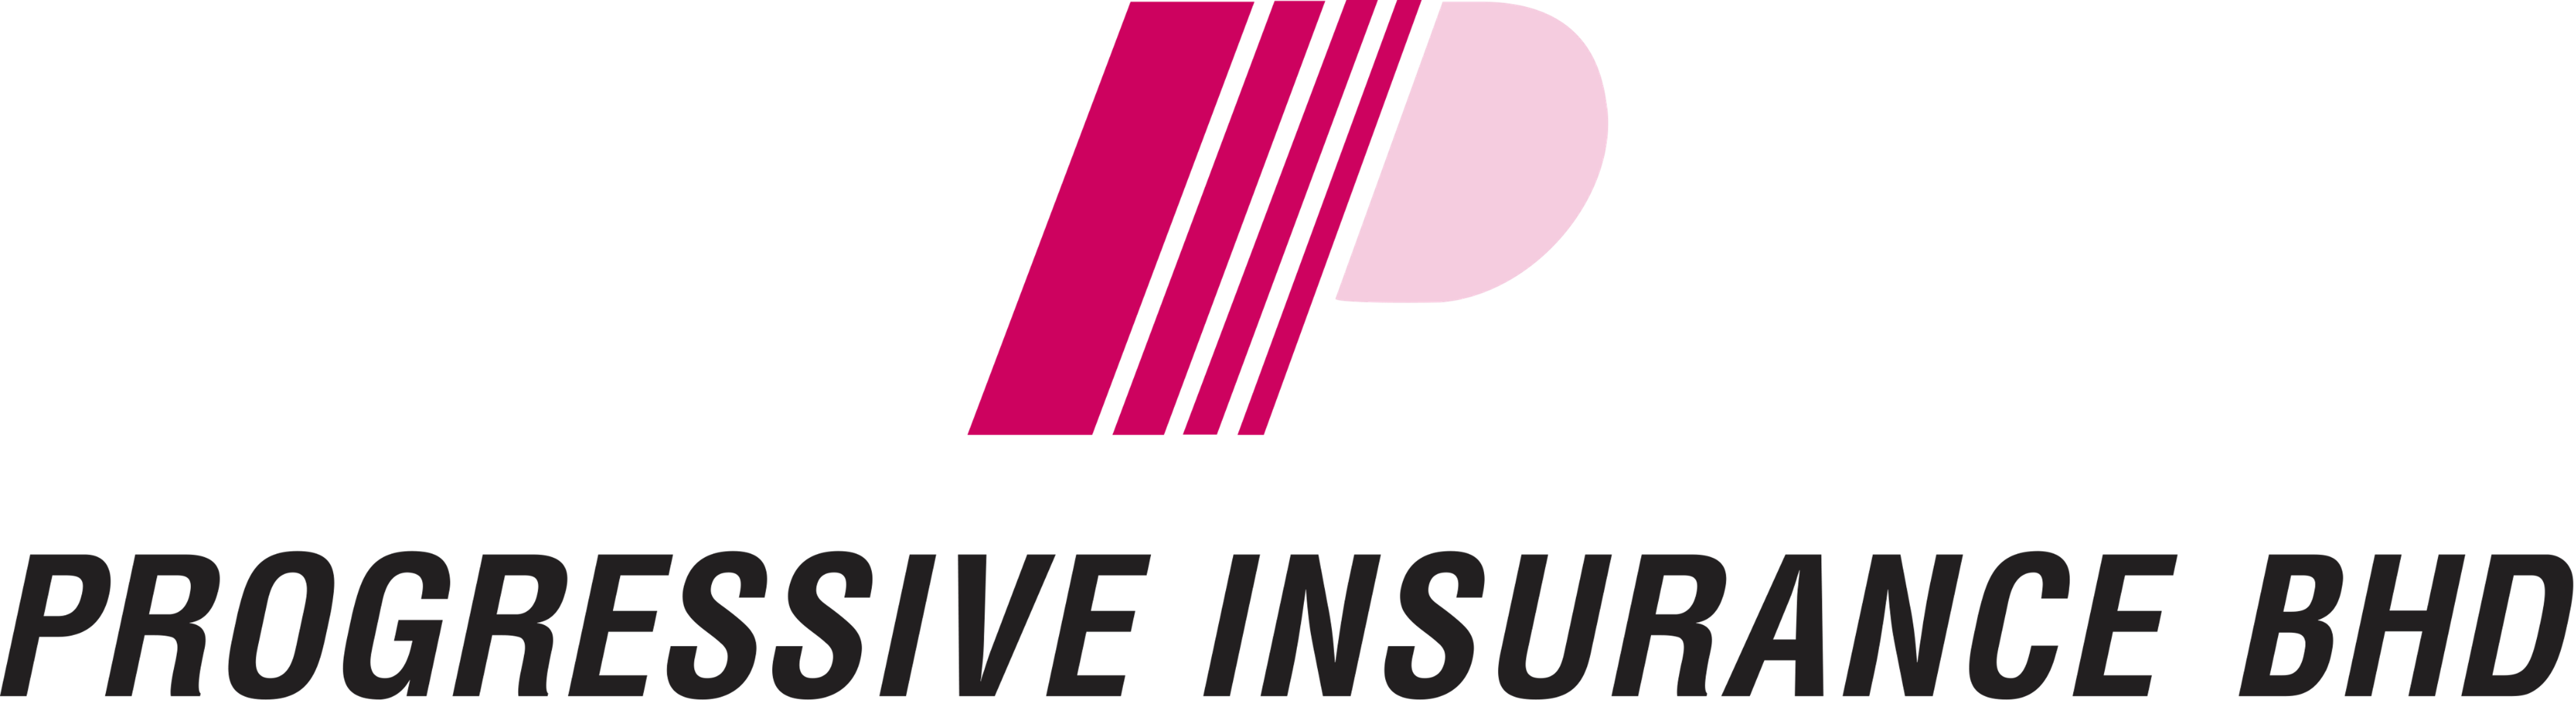 Progressive Insurance Bhd